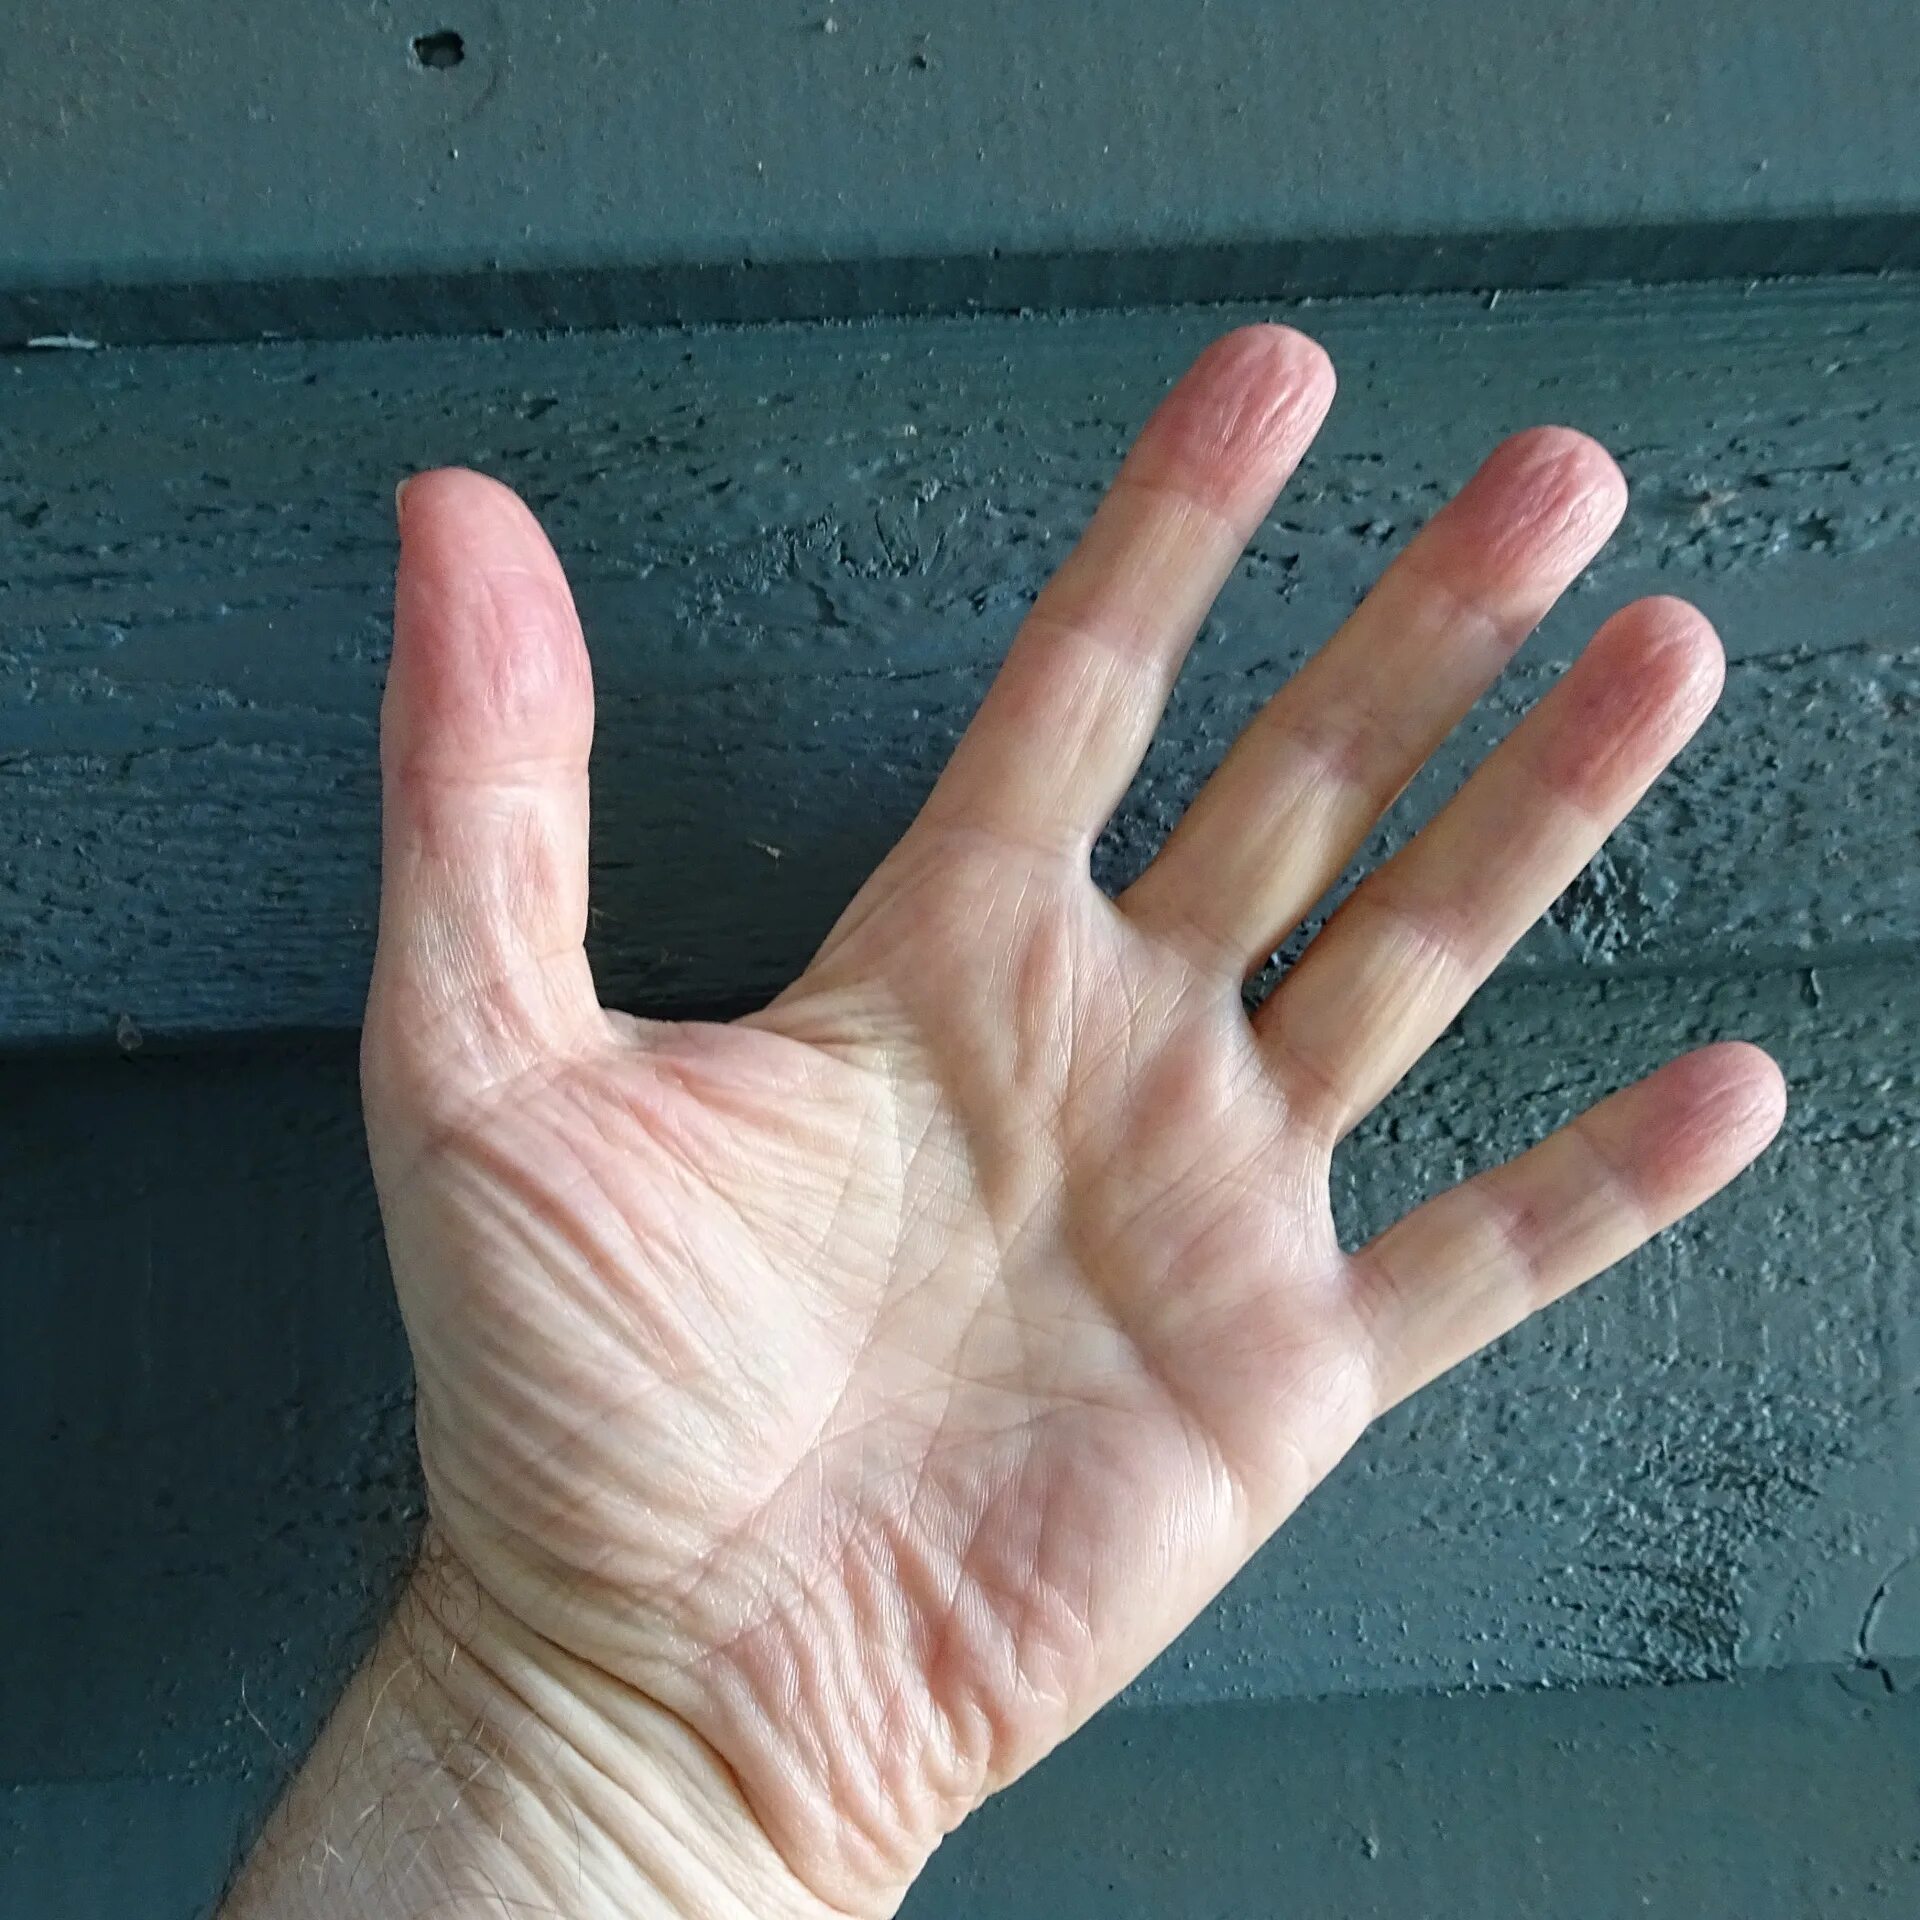 Акроцианоз синдром Рейно. Ладони. Левая рука темнее правой